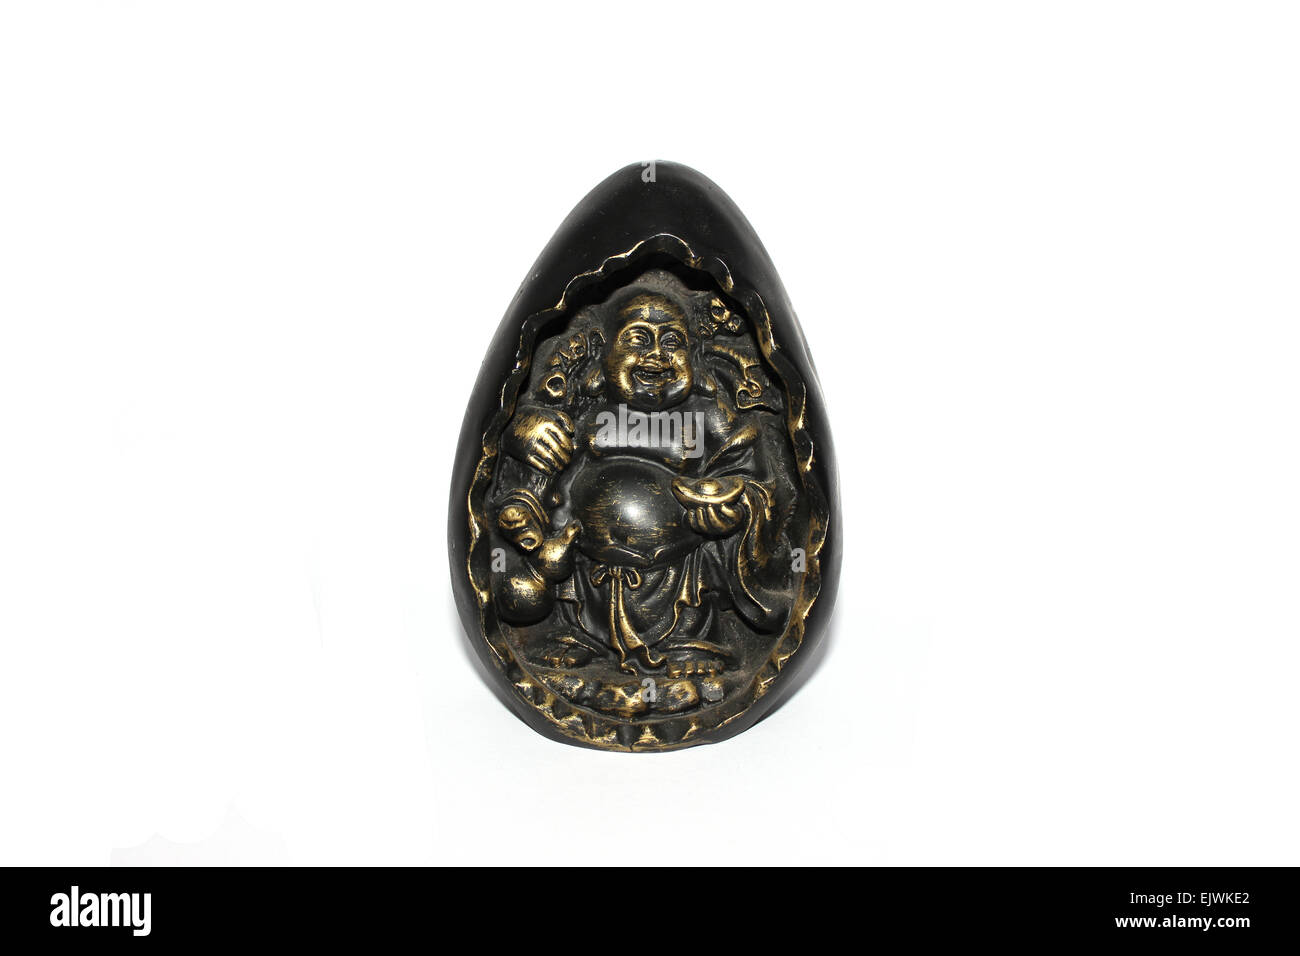 Statue of Budai, Laughing Buddha, sitting inside egg. Stock Photo